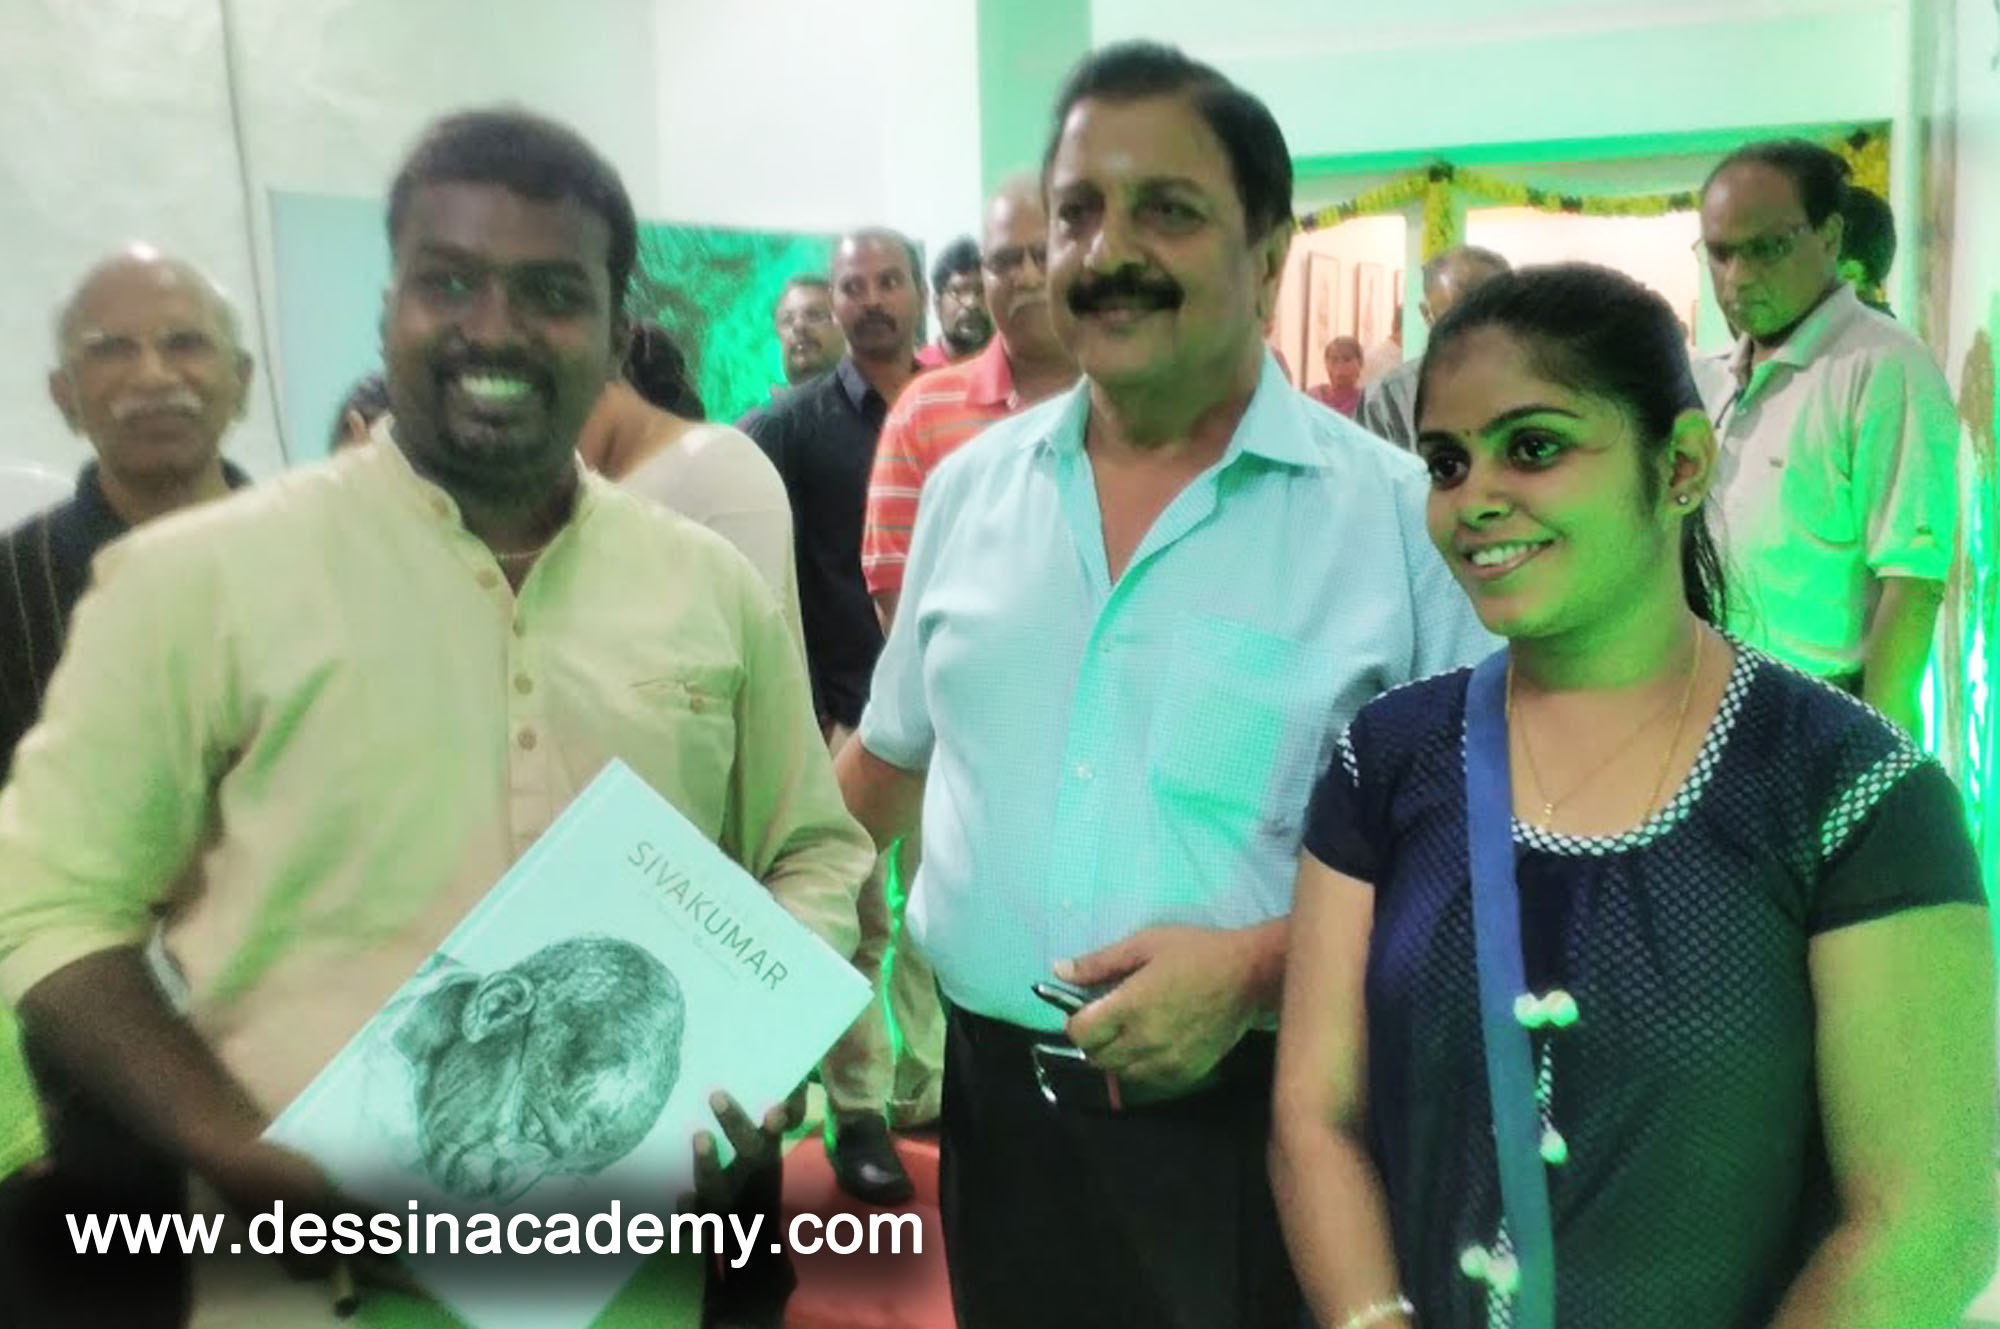 Dessin School of Arts Event Gallery 4, Drawing Institute in ChandapuraDessin School of Arts